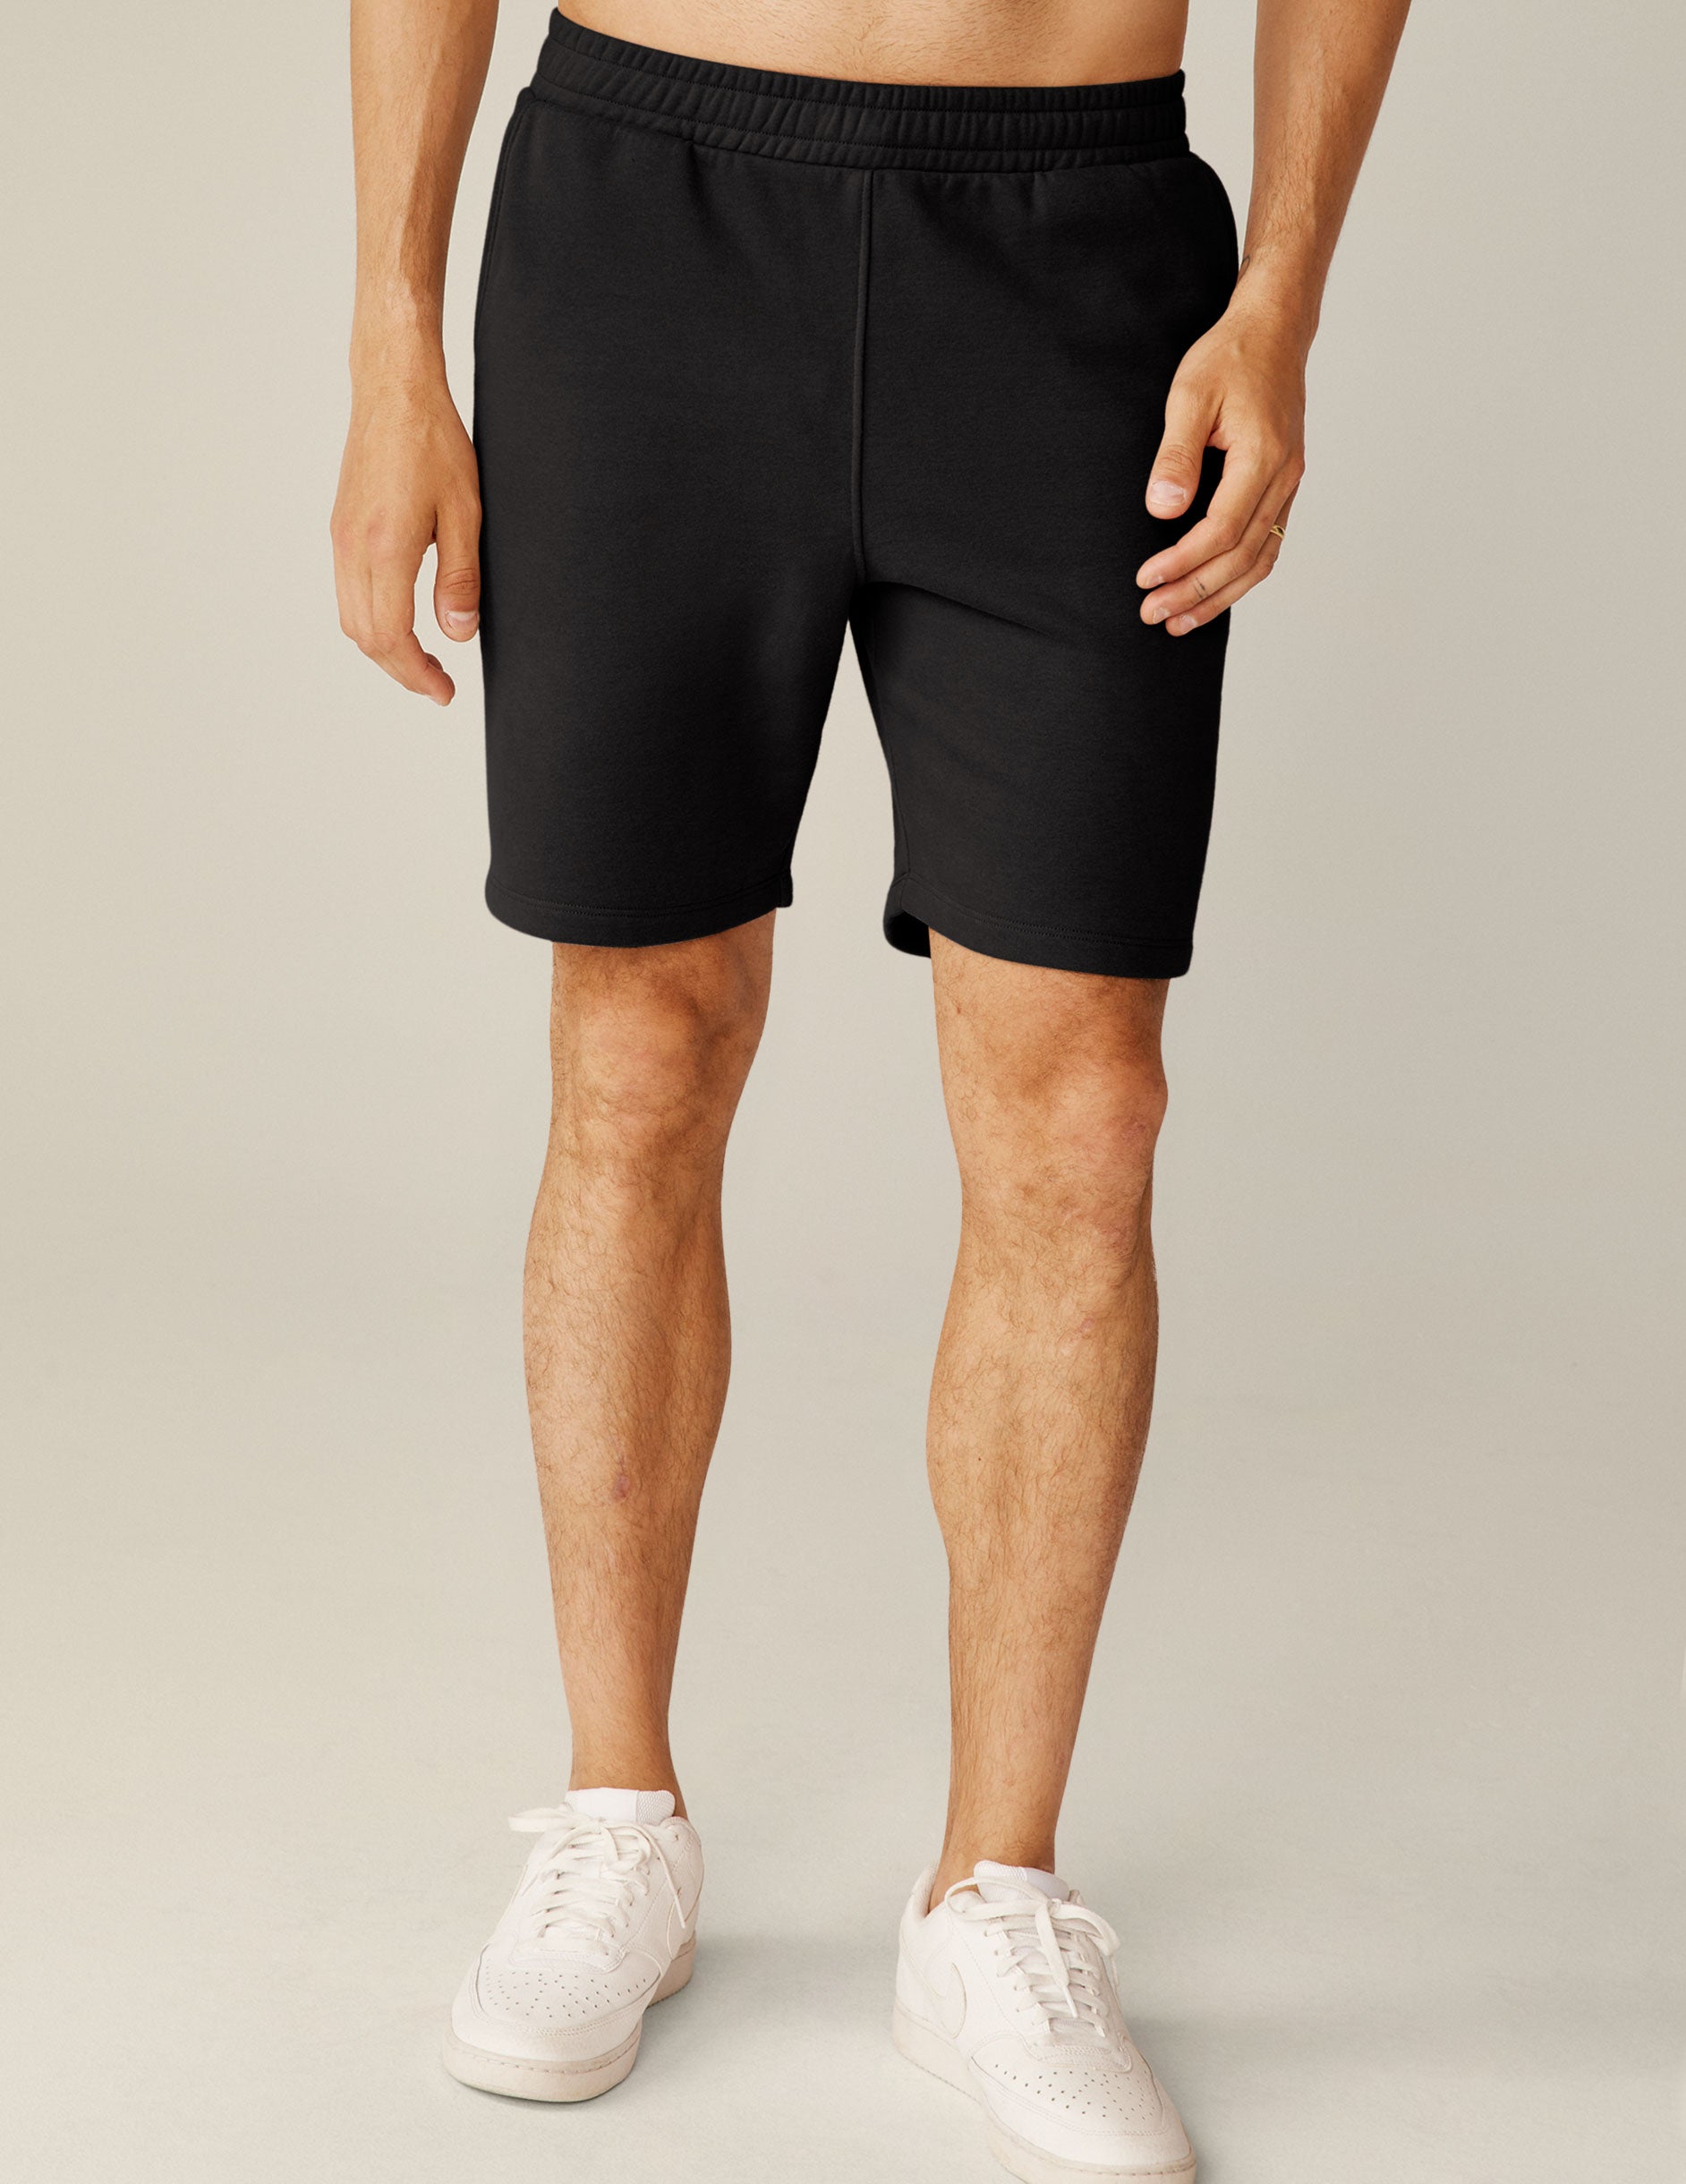 black men's shorts with pockets. 